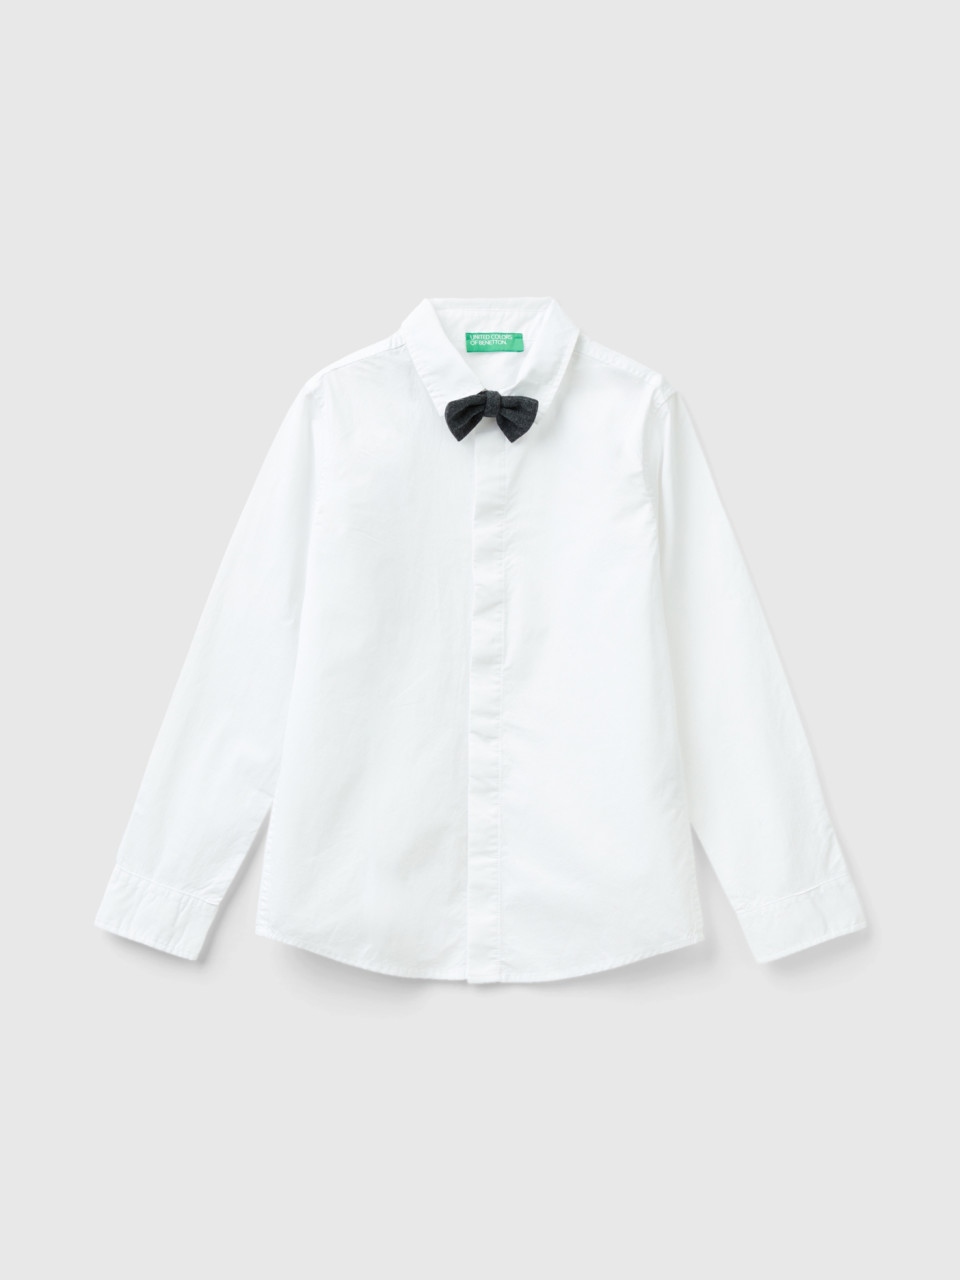 Benetton, Shirt With Detachable Bow Tie, White, Kids